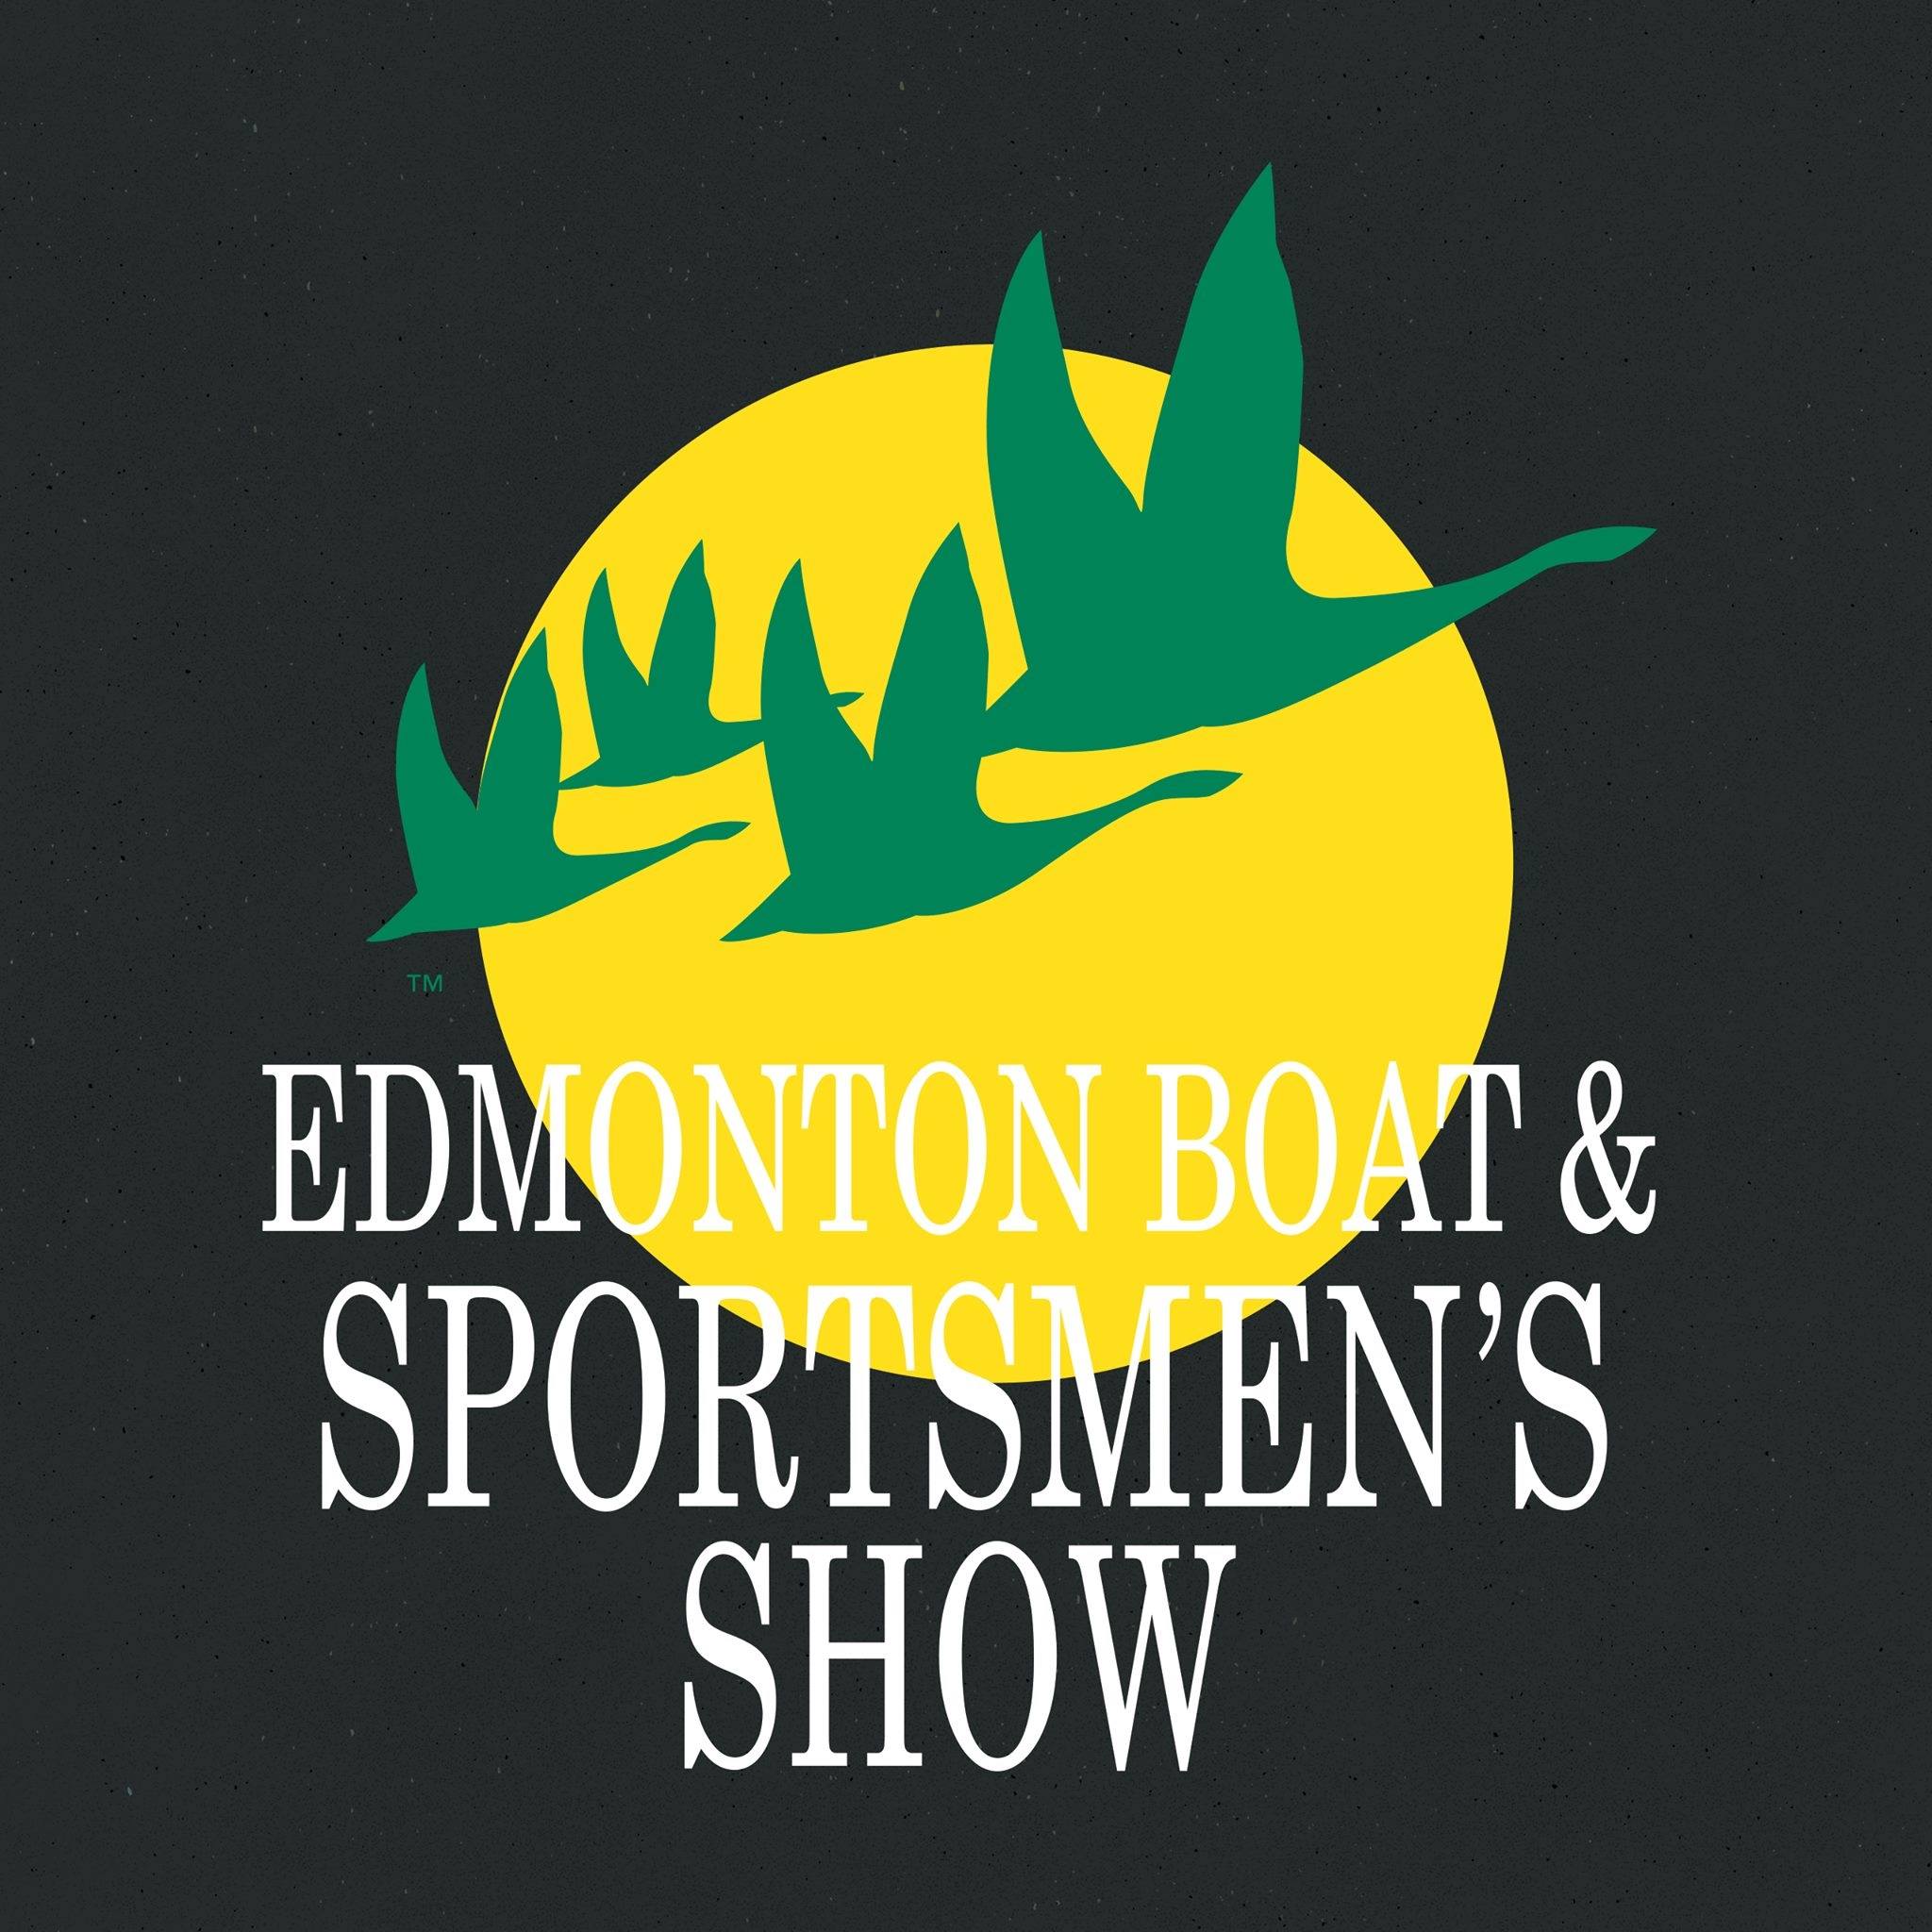 Edmonton Boat and Sportsmen's Show